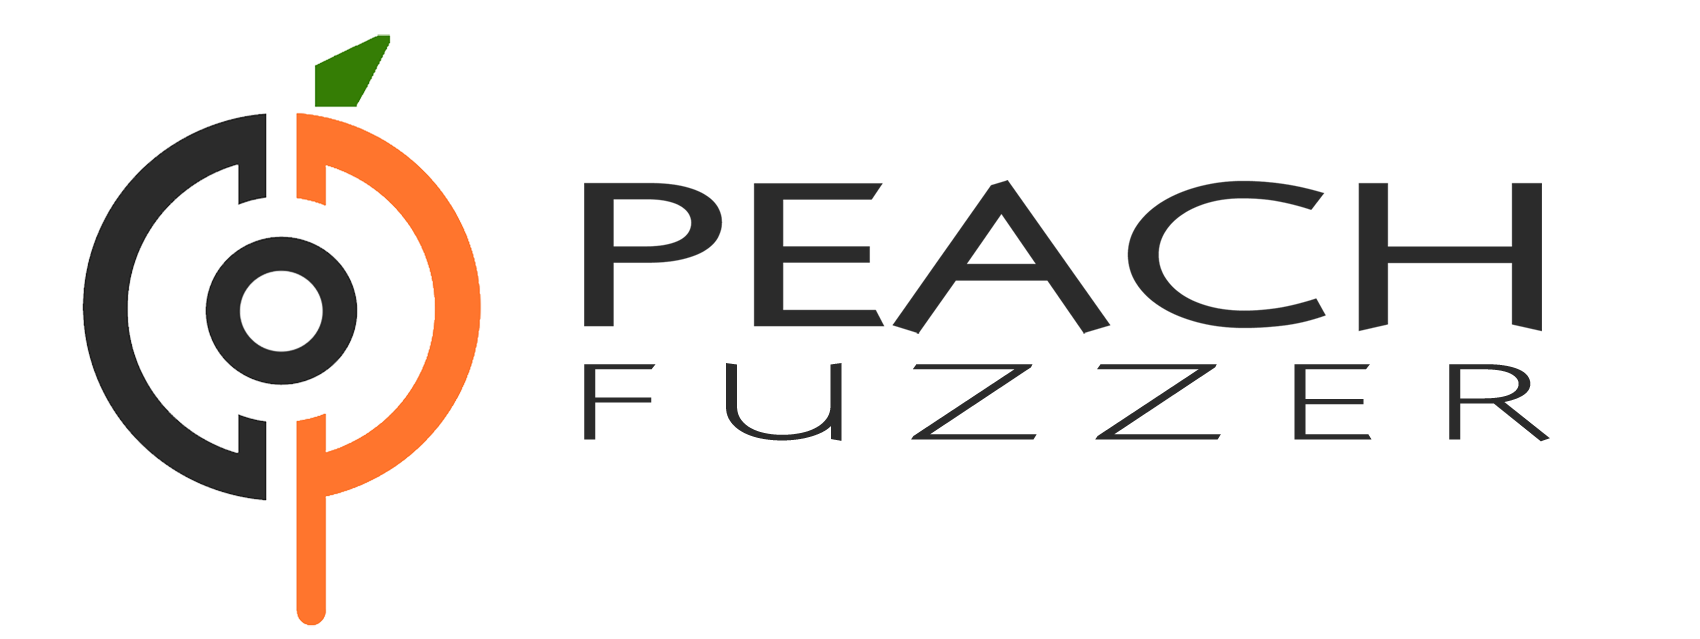 Peach Fuzzer